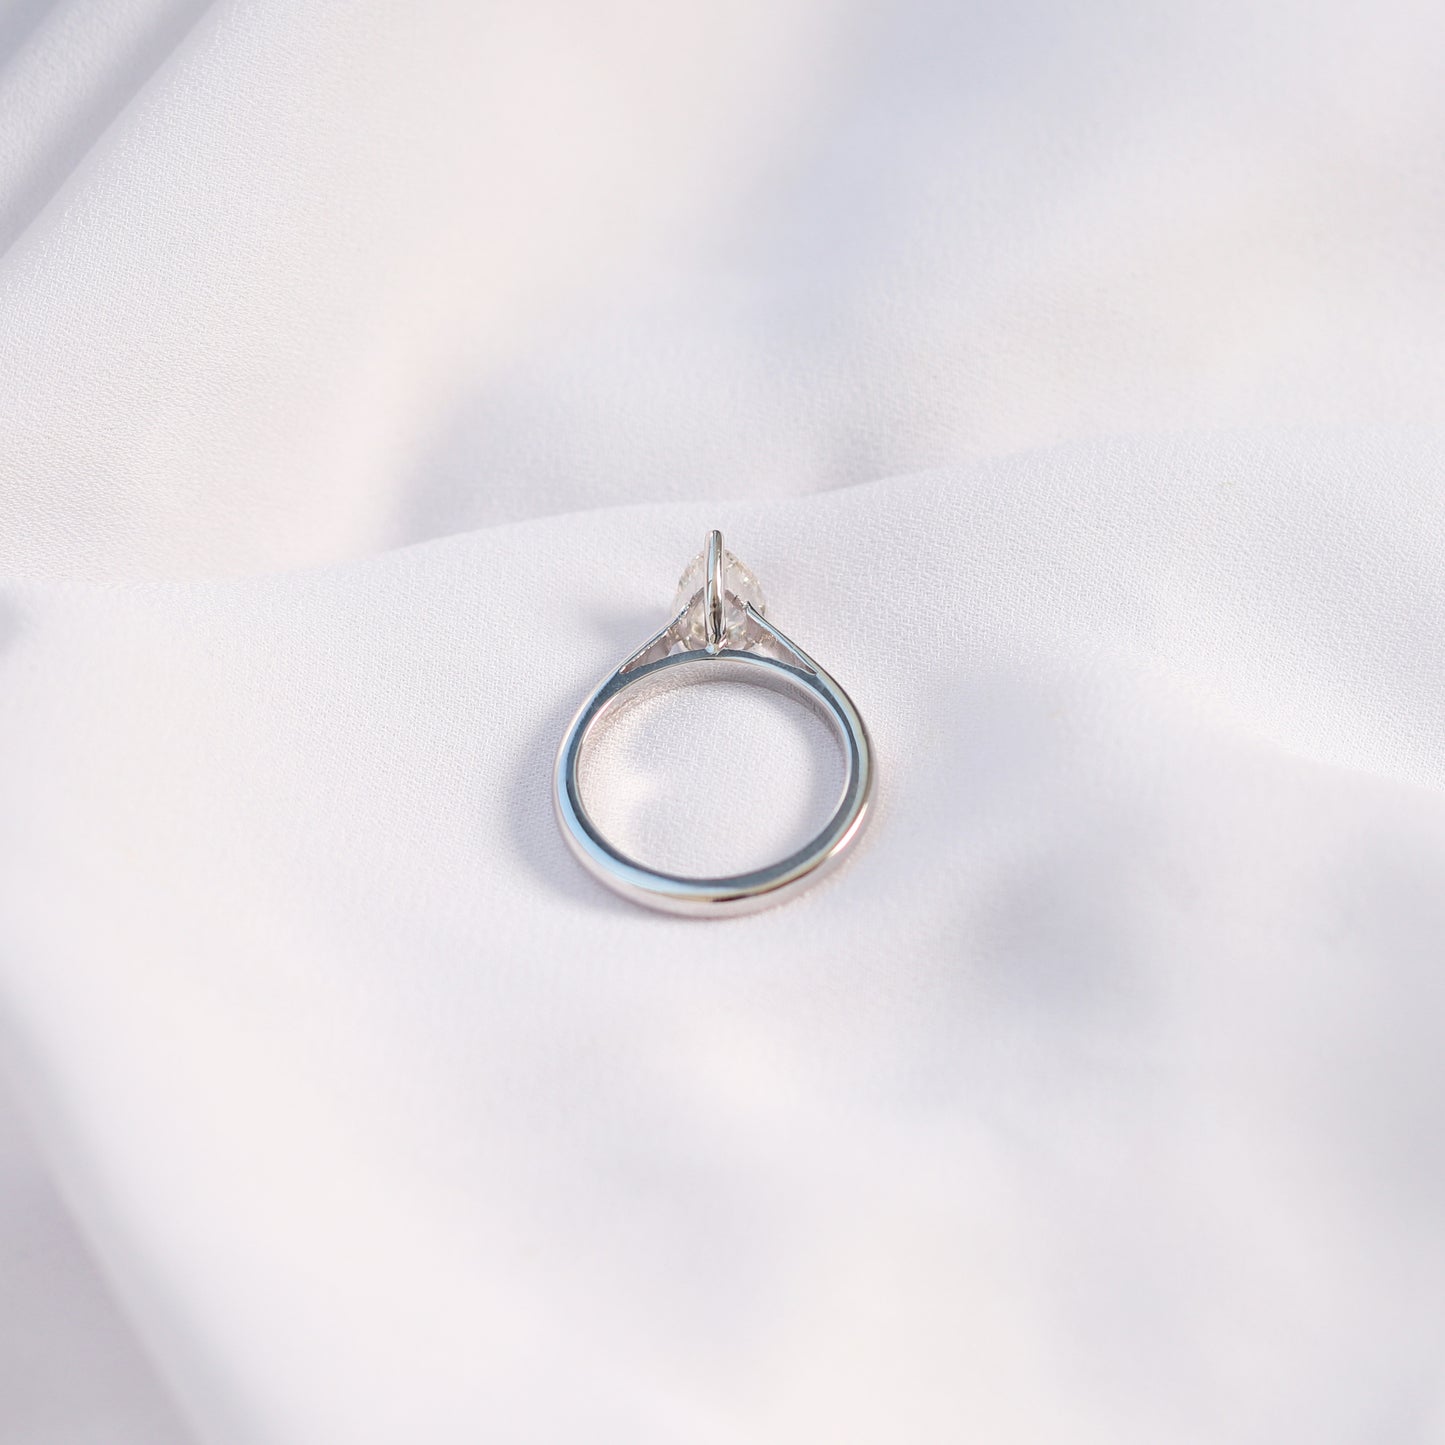 custom pear shape diamond ring